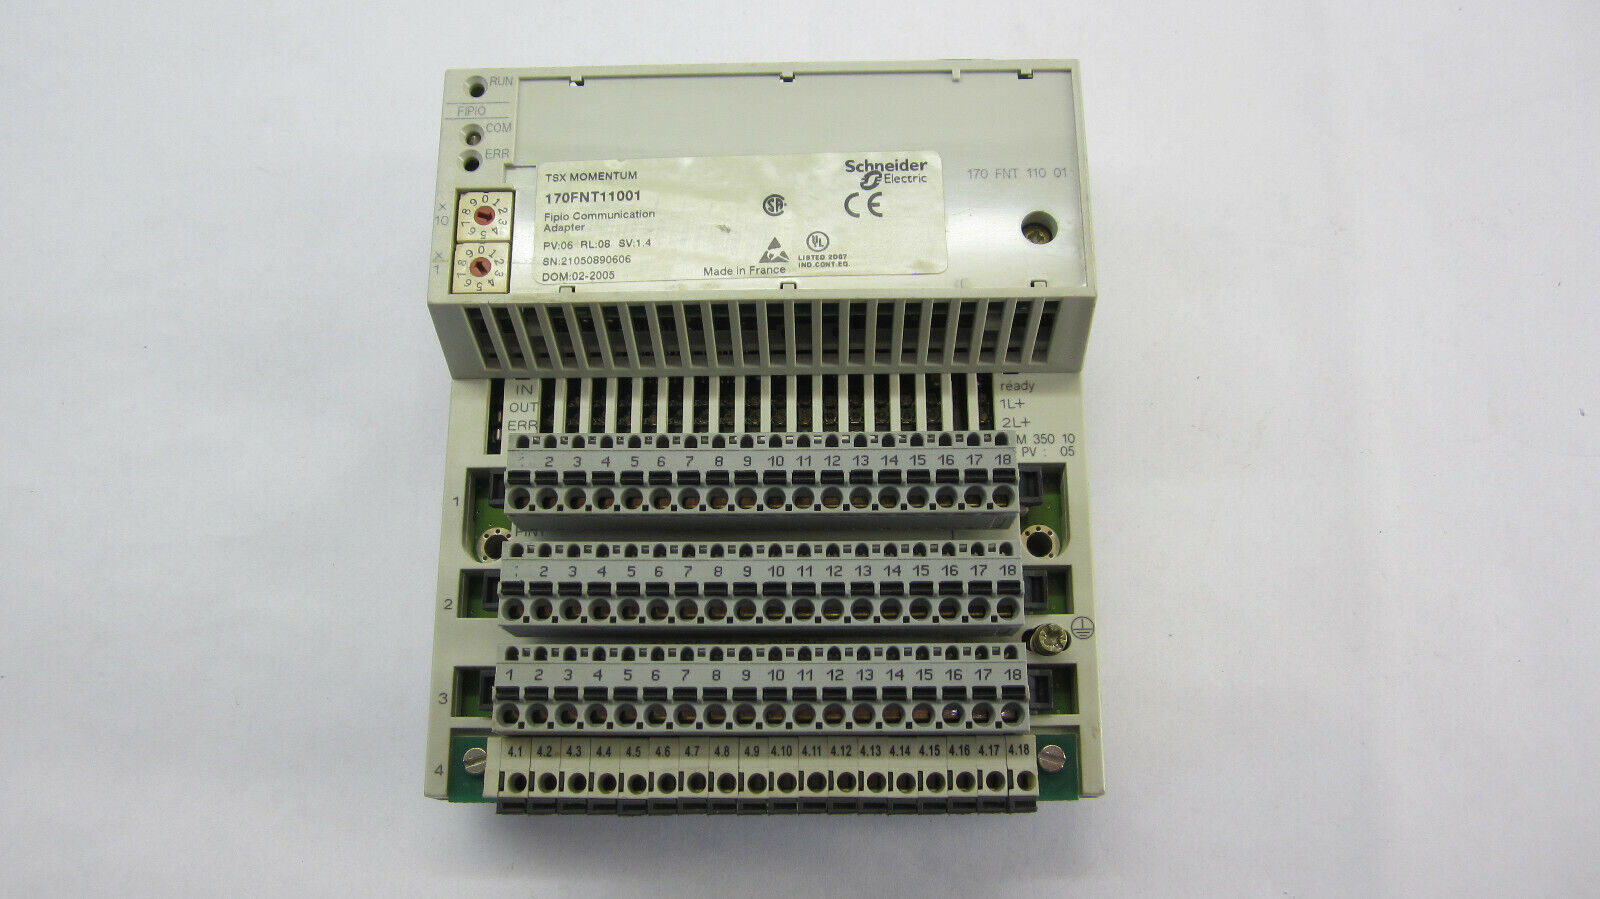 MODICON TSX MOMENTUM 170ADM35010 with 170FNT11001 Fipio communication adaptor